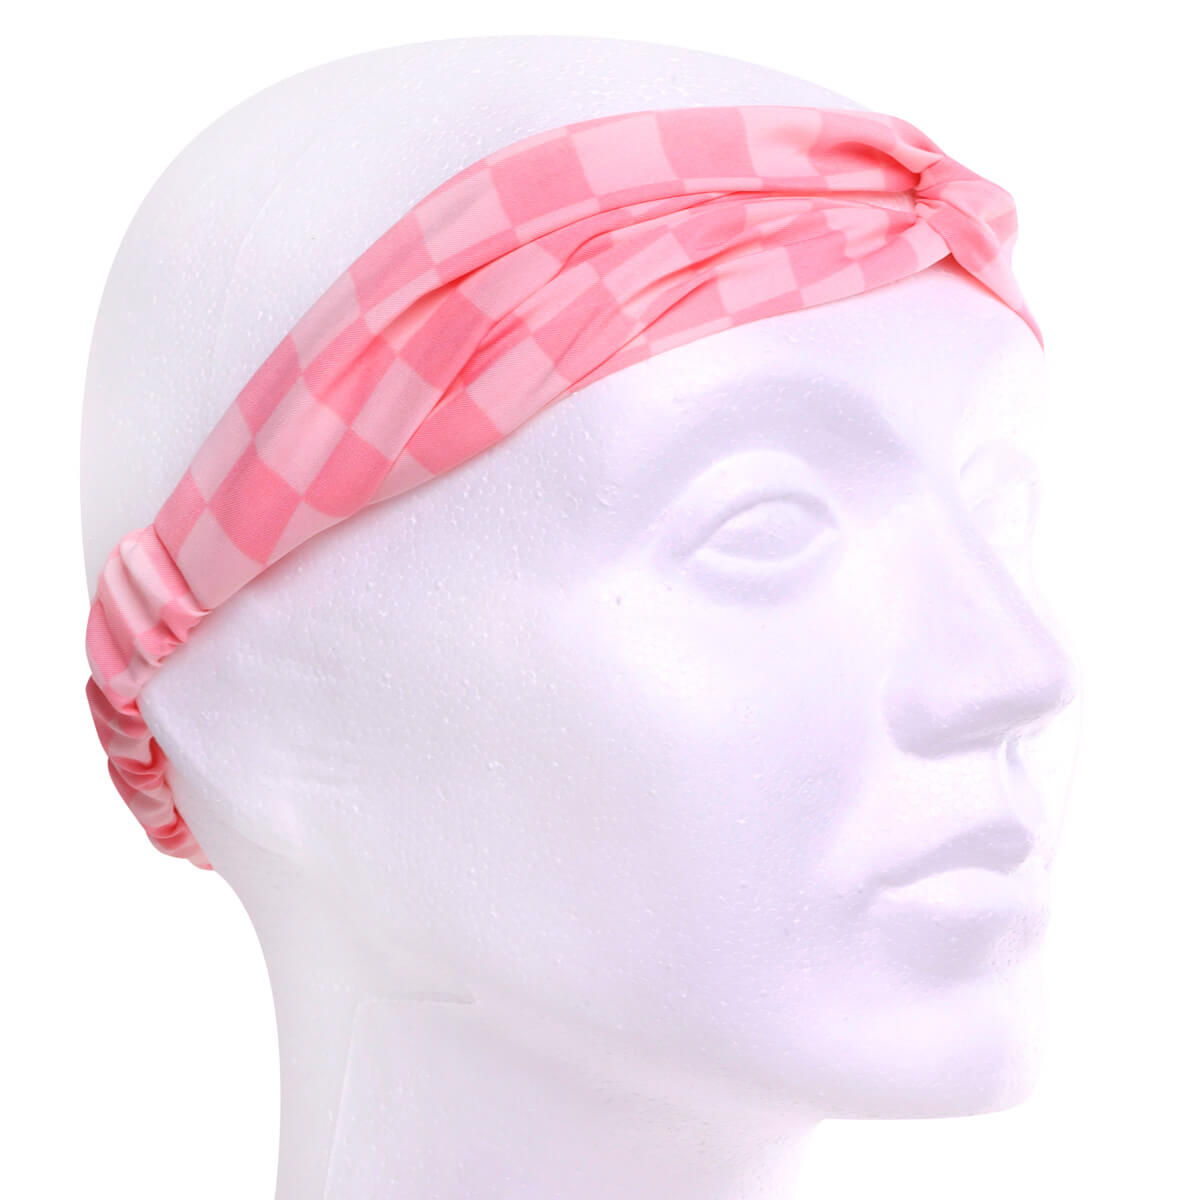 Plaid fabric elastic hairband